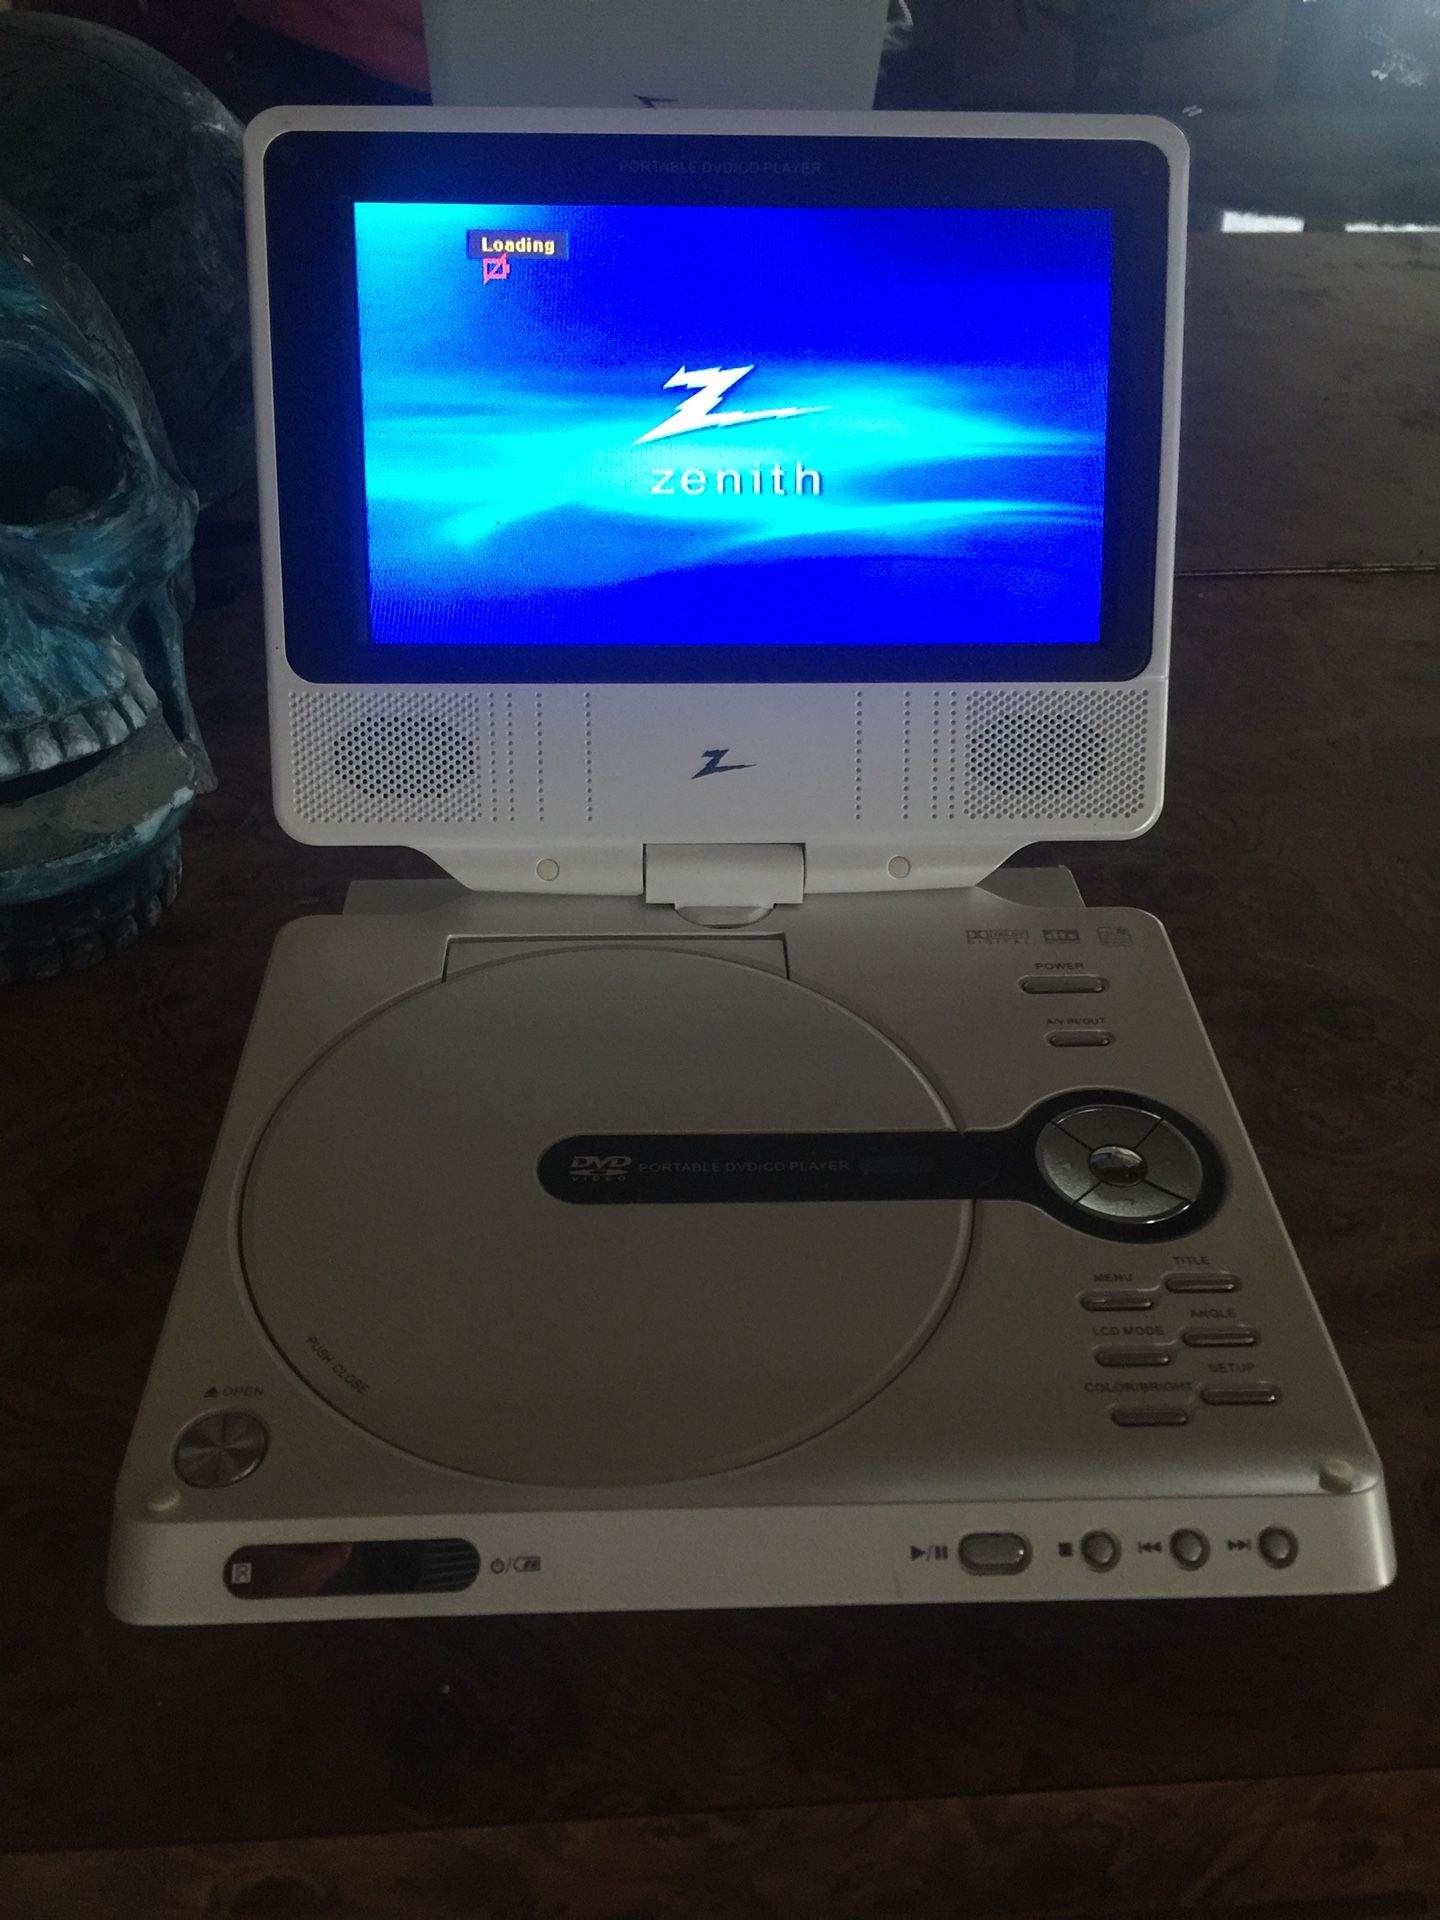 Zenith Portable DVD player